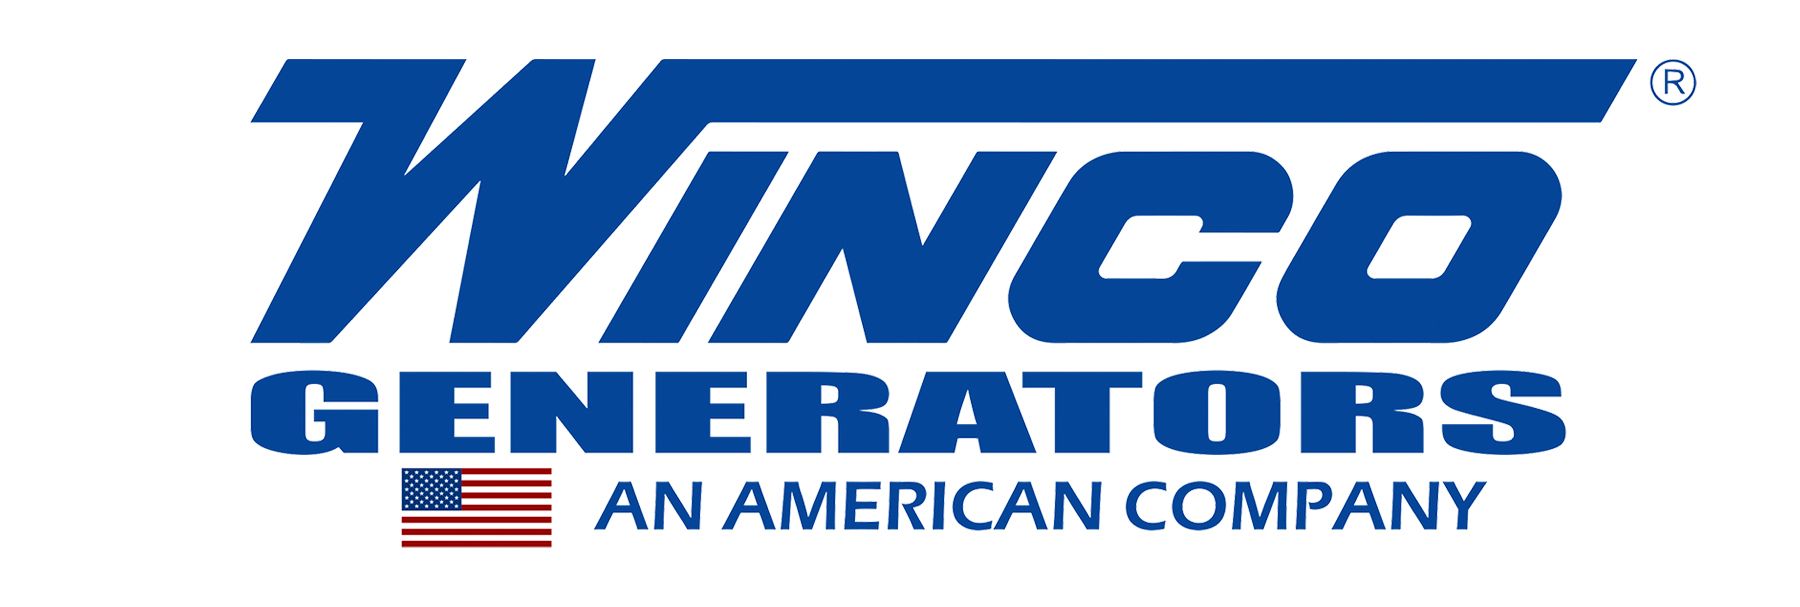 the logo for winco generators an american company